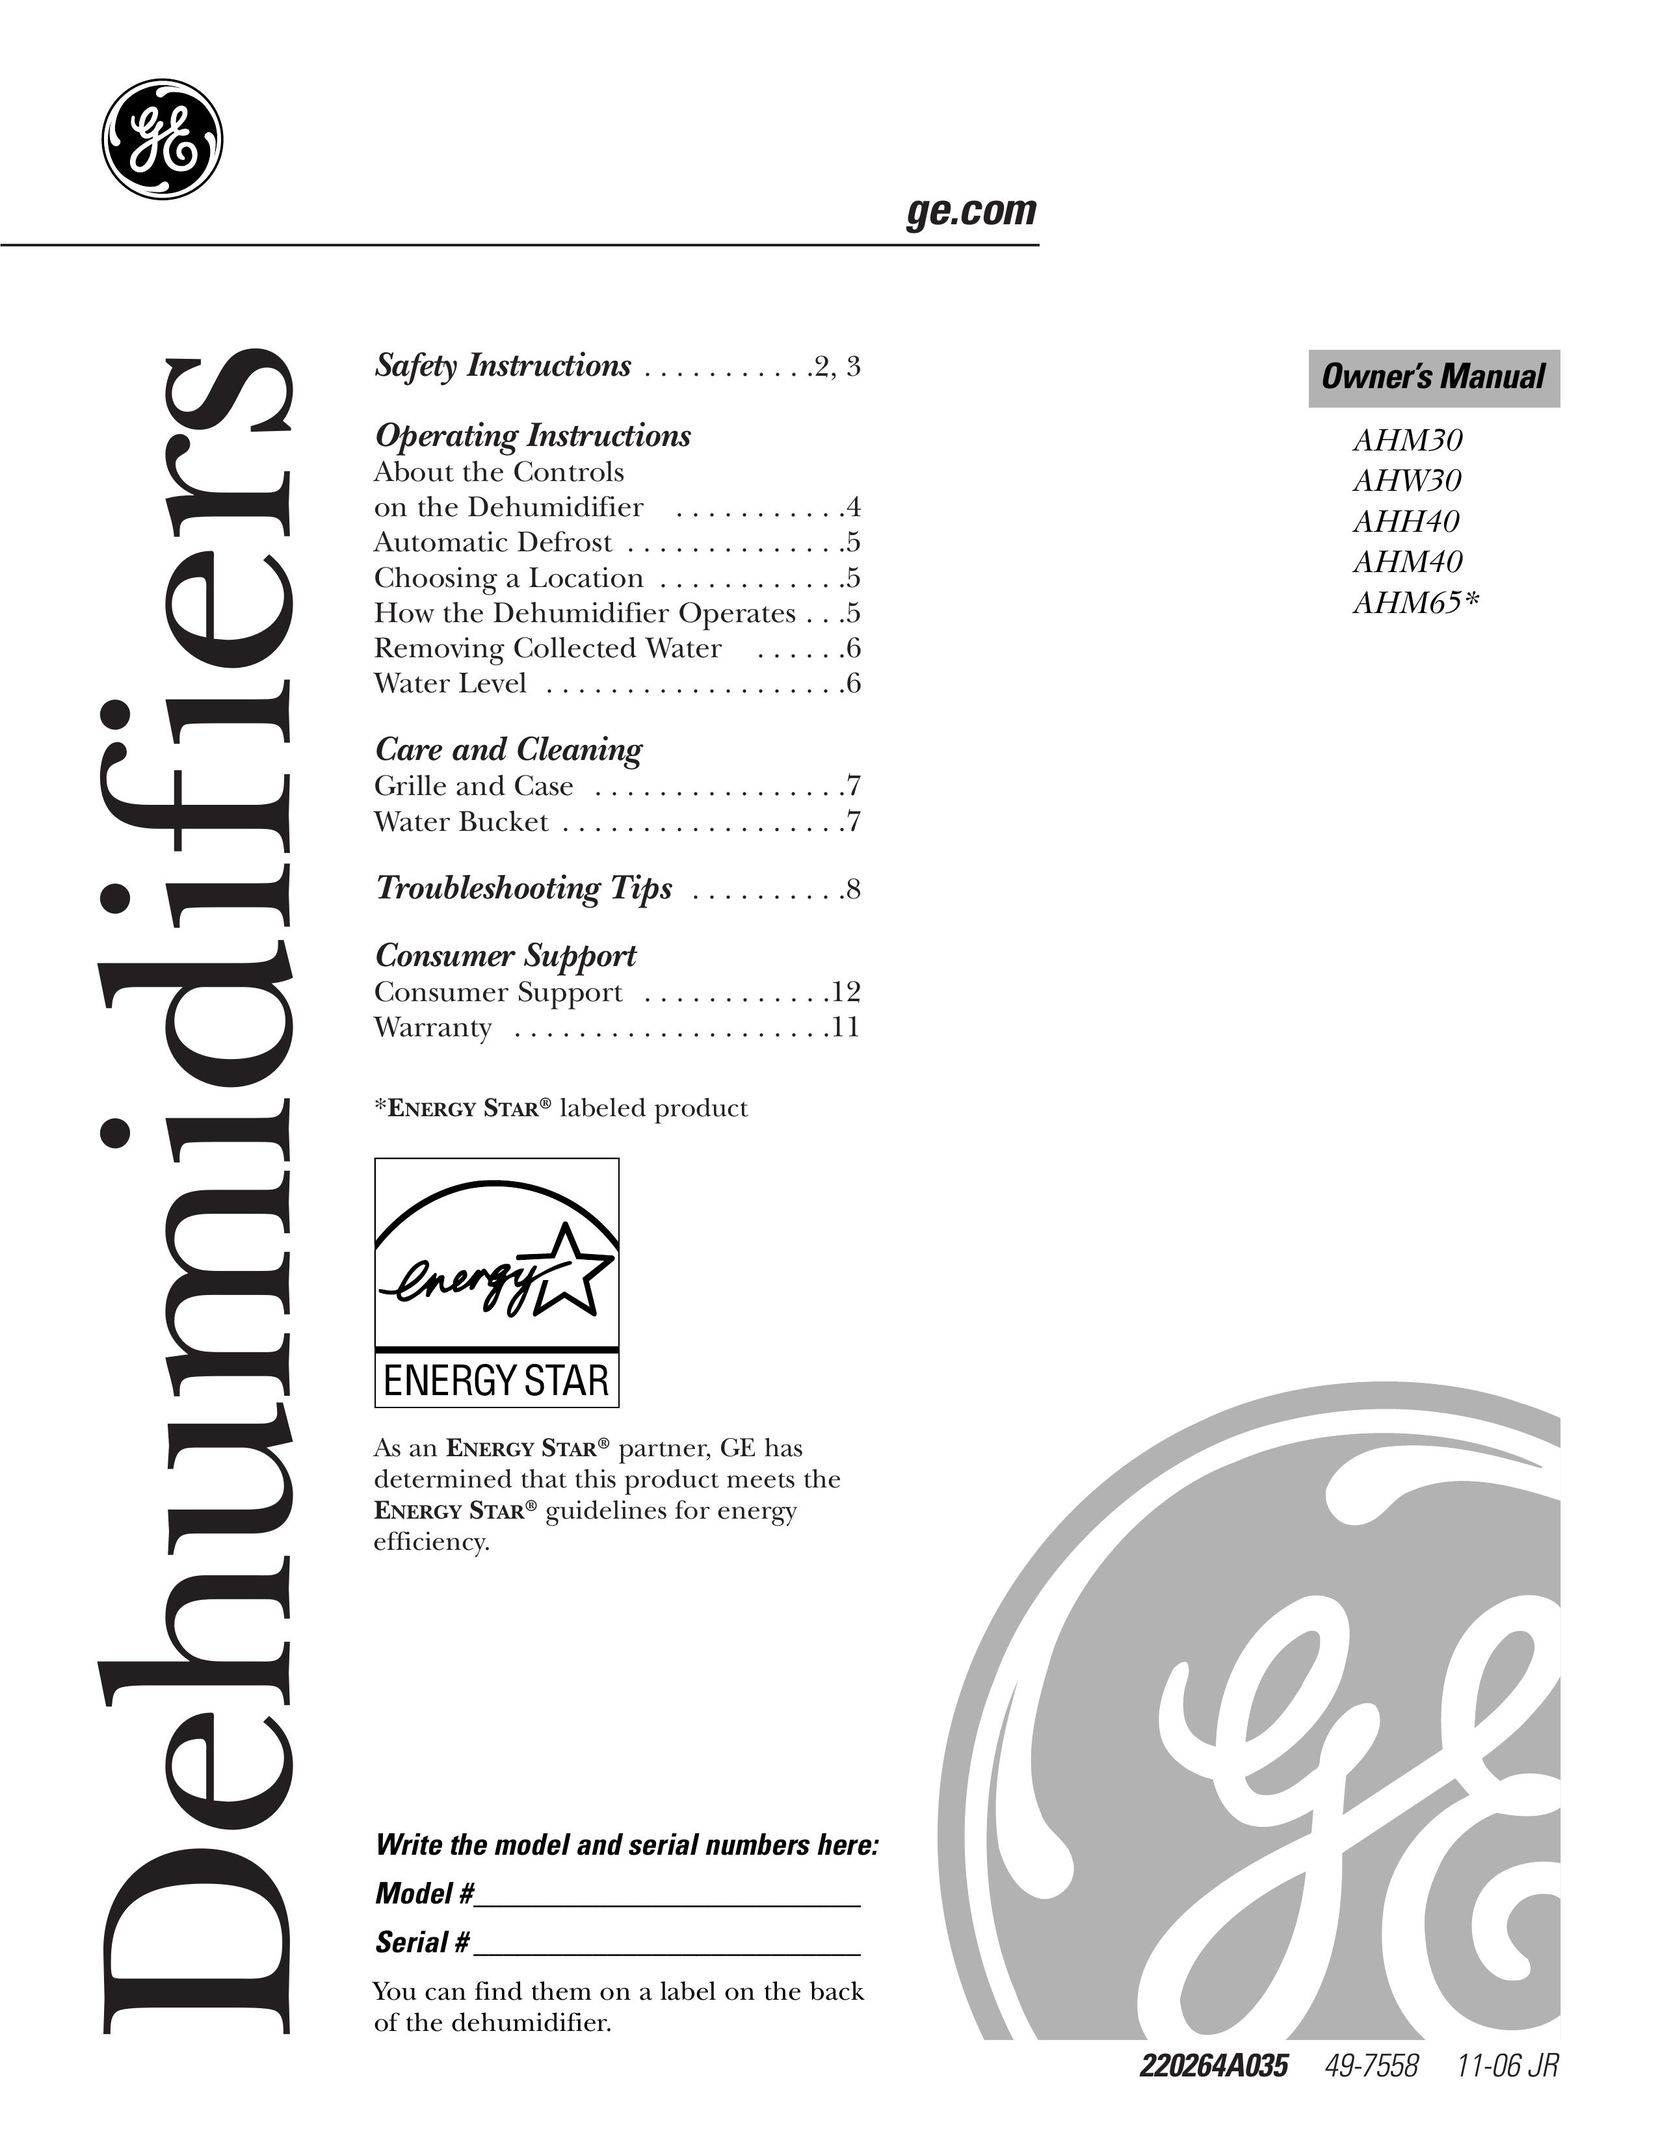 GE AHM65* Dehumidifier User Manual